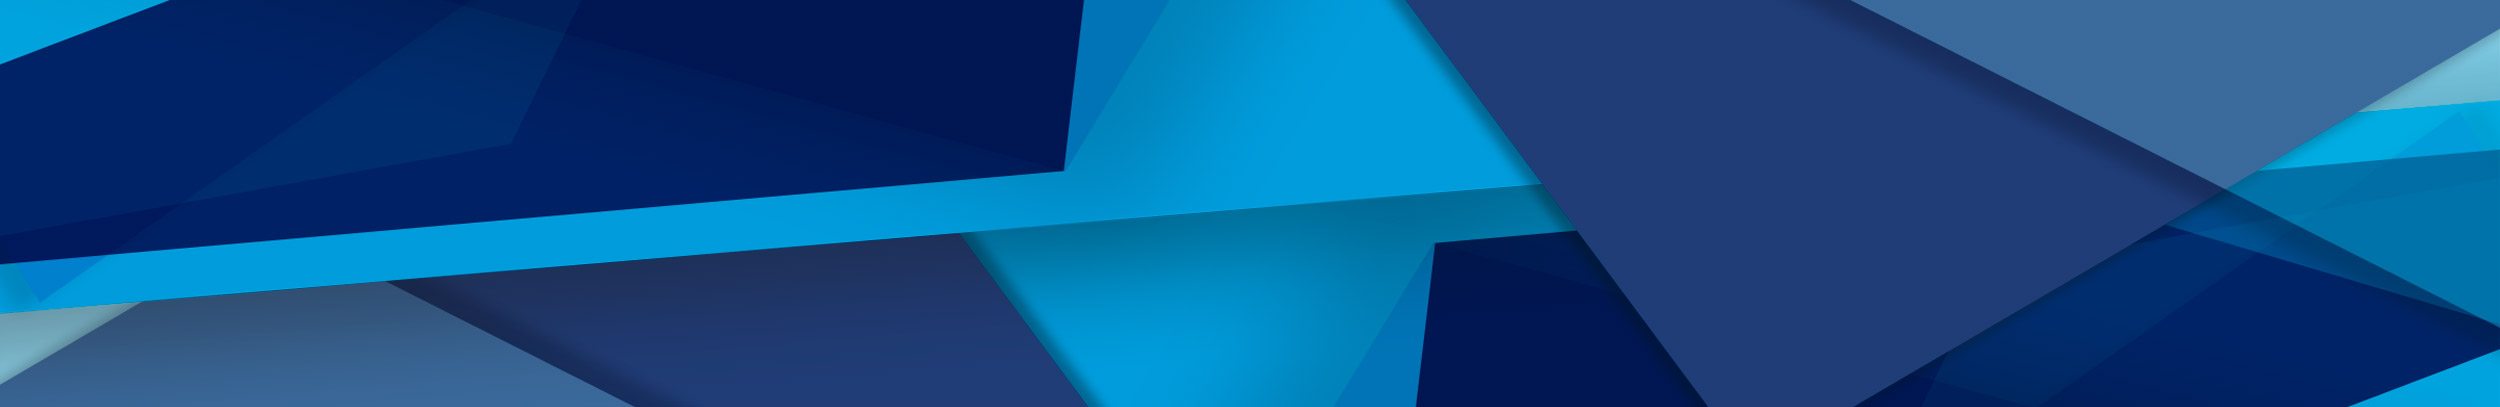 tri angular background shapes blue